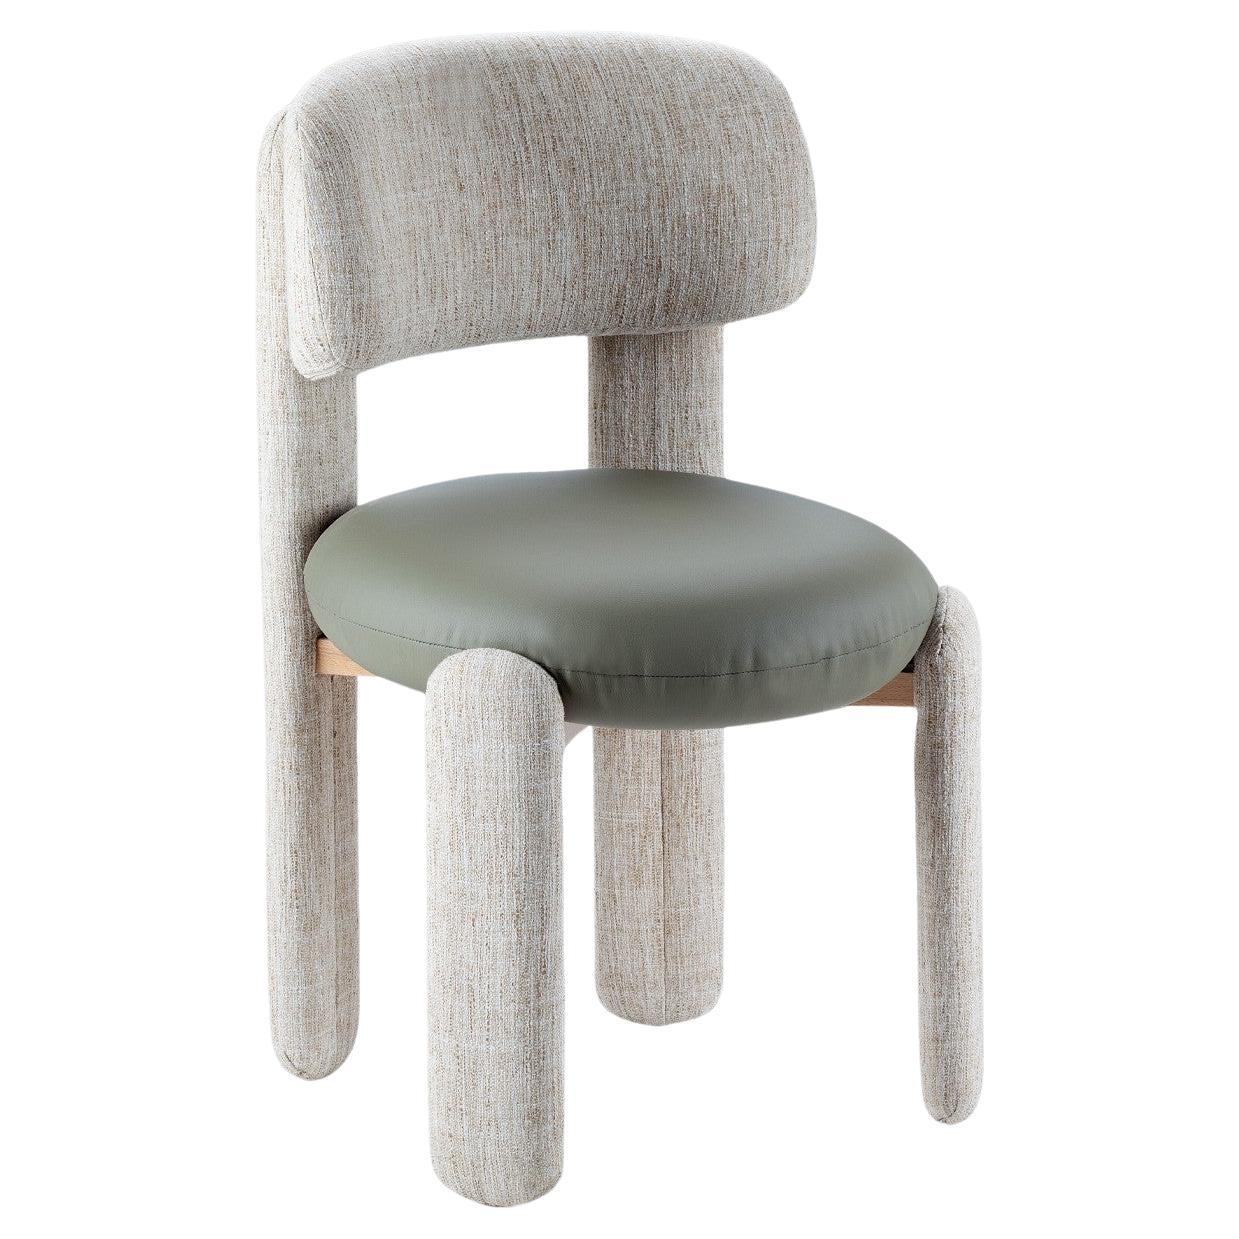 Handmade Contemporary Mambo Unlimited Ideas Choux khaki seat Chair